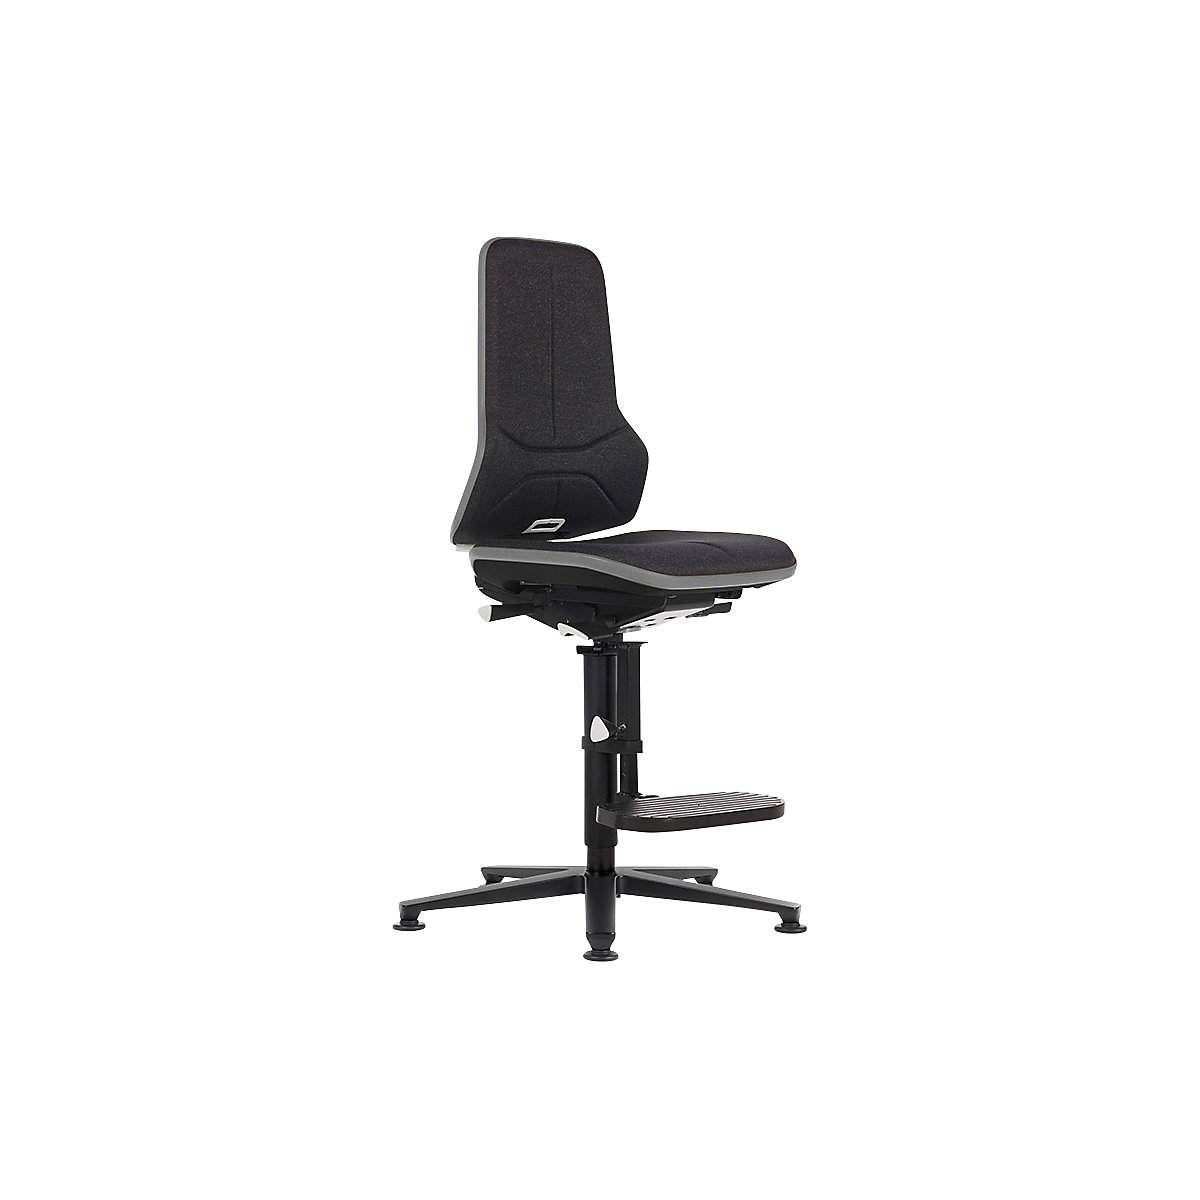 Radna okretna stolica NEON ESD, kliznik, podrška za penjanje – bimos, stalni kontakt, tkanina, fleksibilna traka u sivoj boji-6